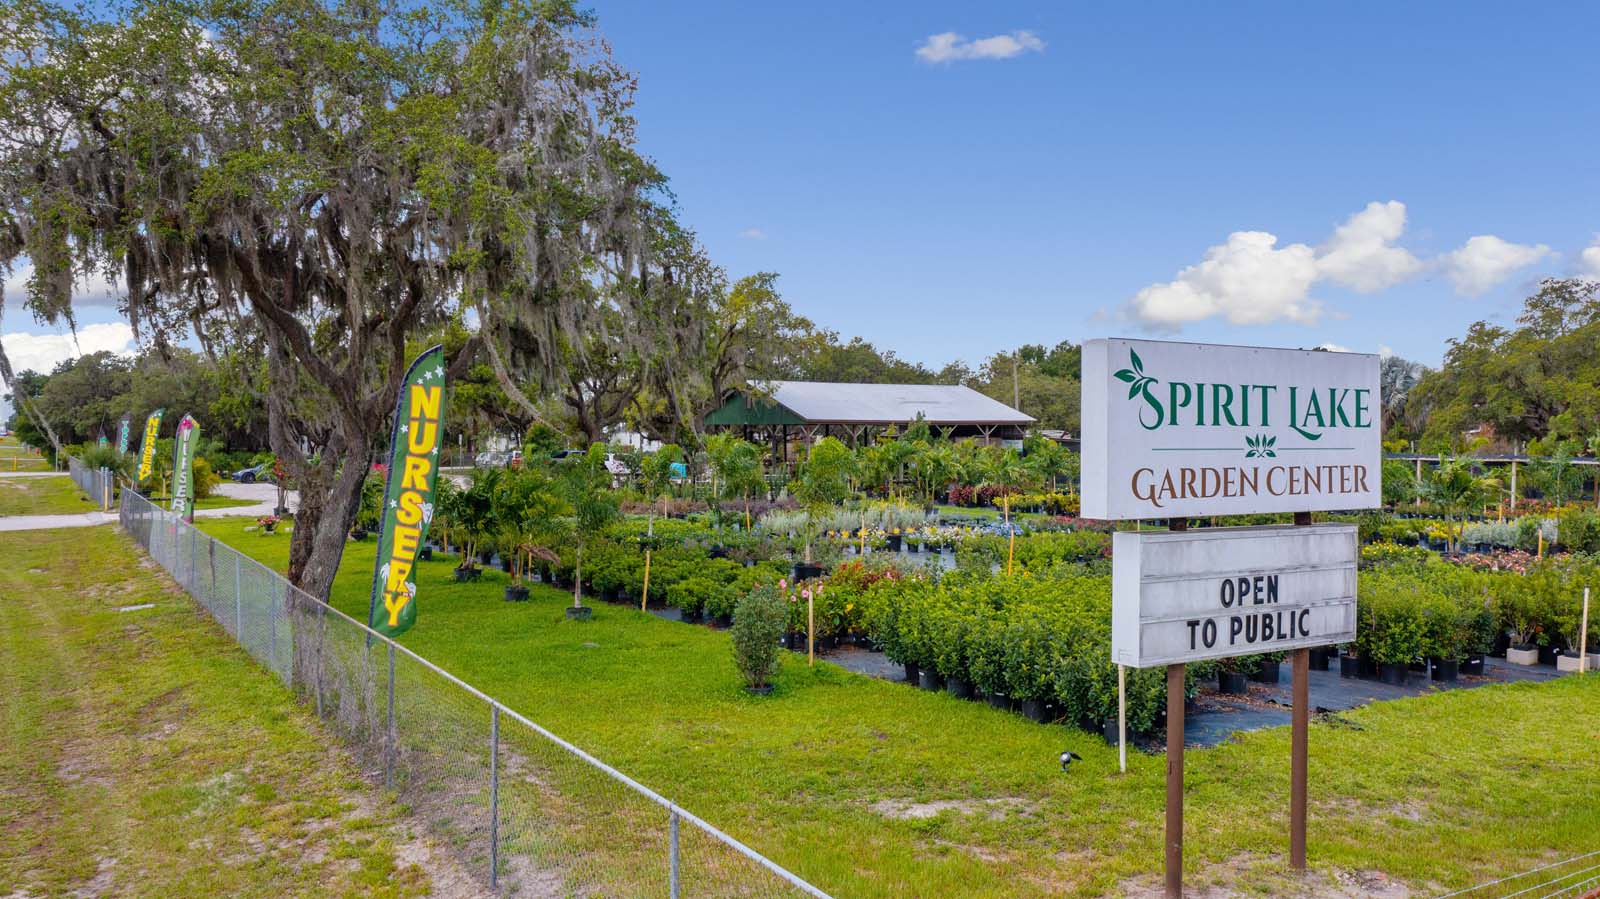 Spirit Lake Garden Center for Landscaping and Gardening Services